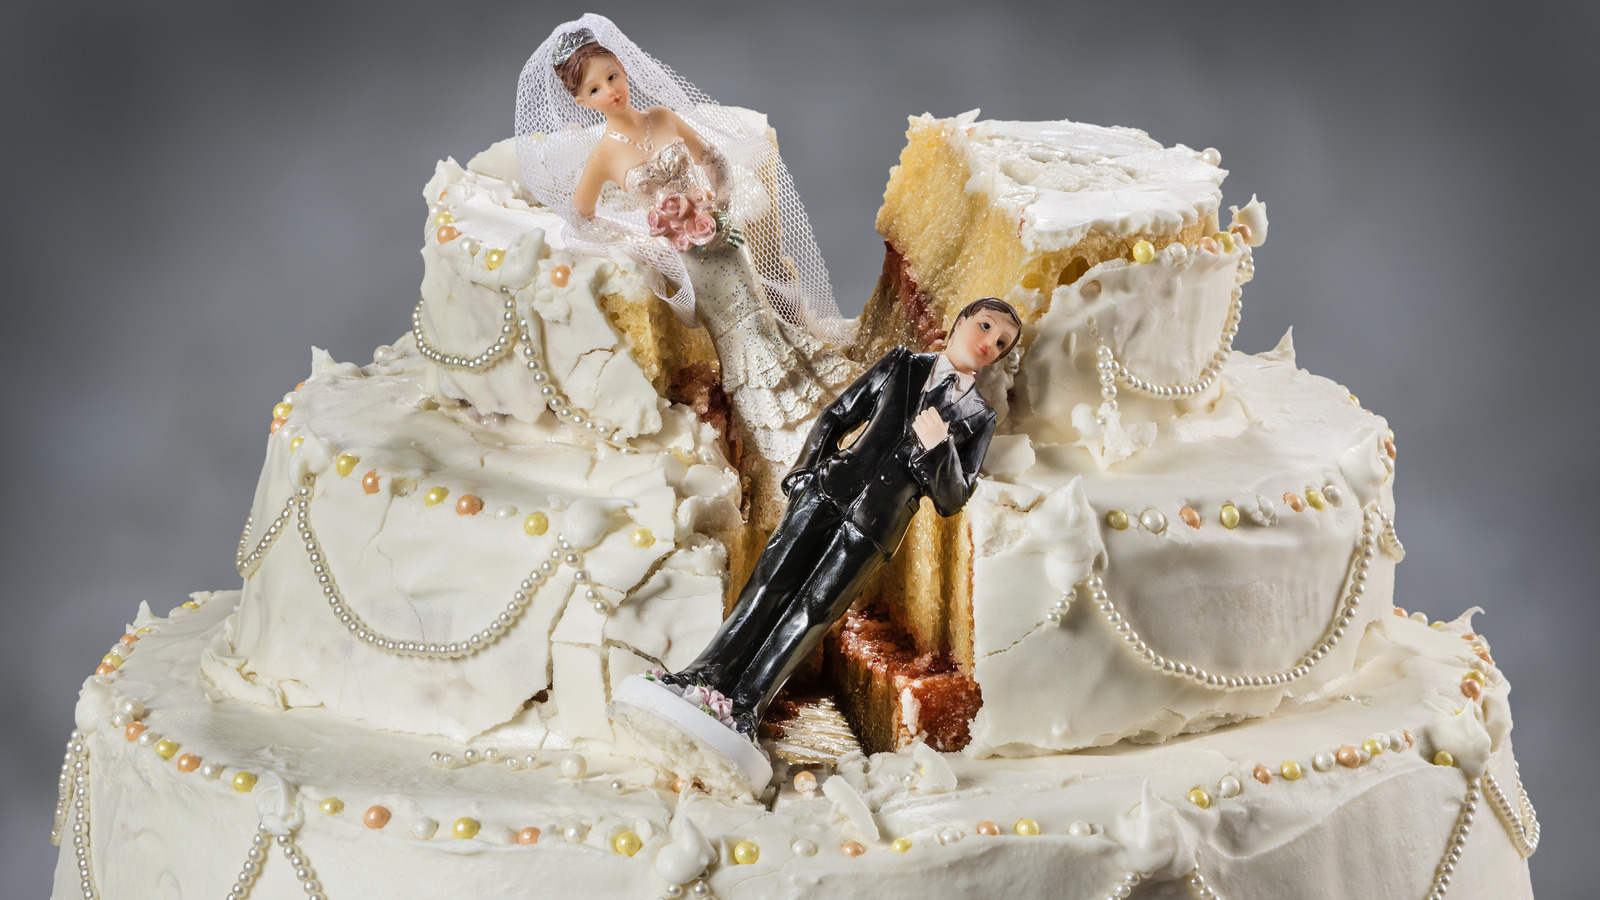 PHOTOS: Epic Cake Fails